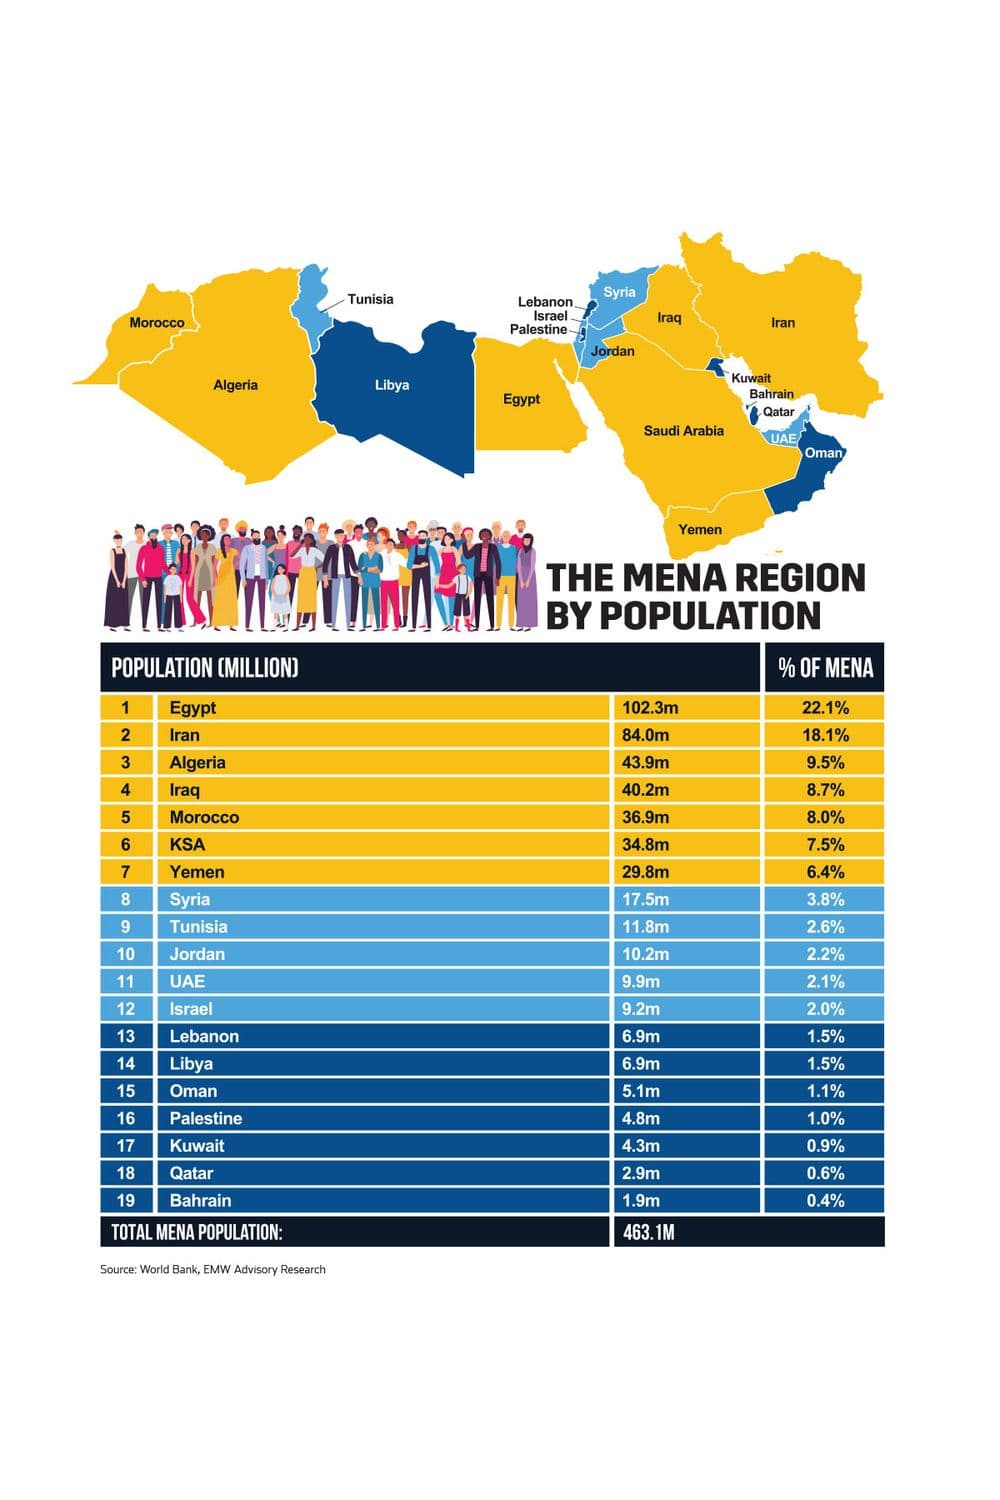 The mena region by population